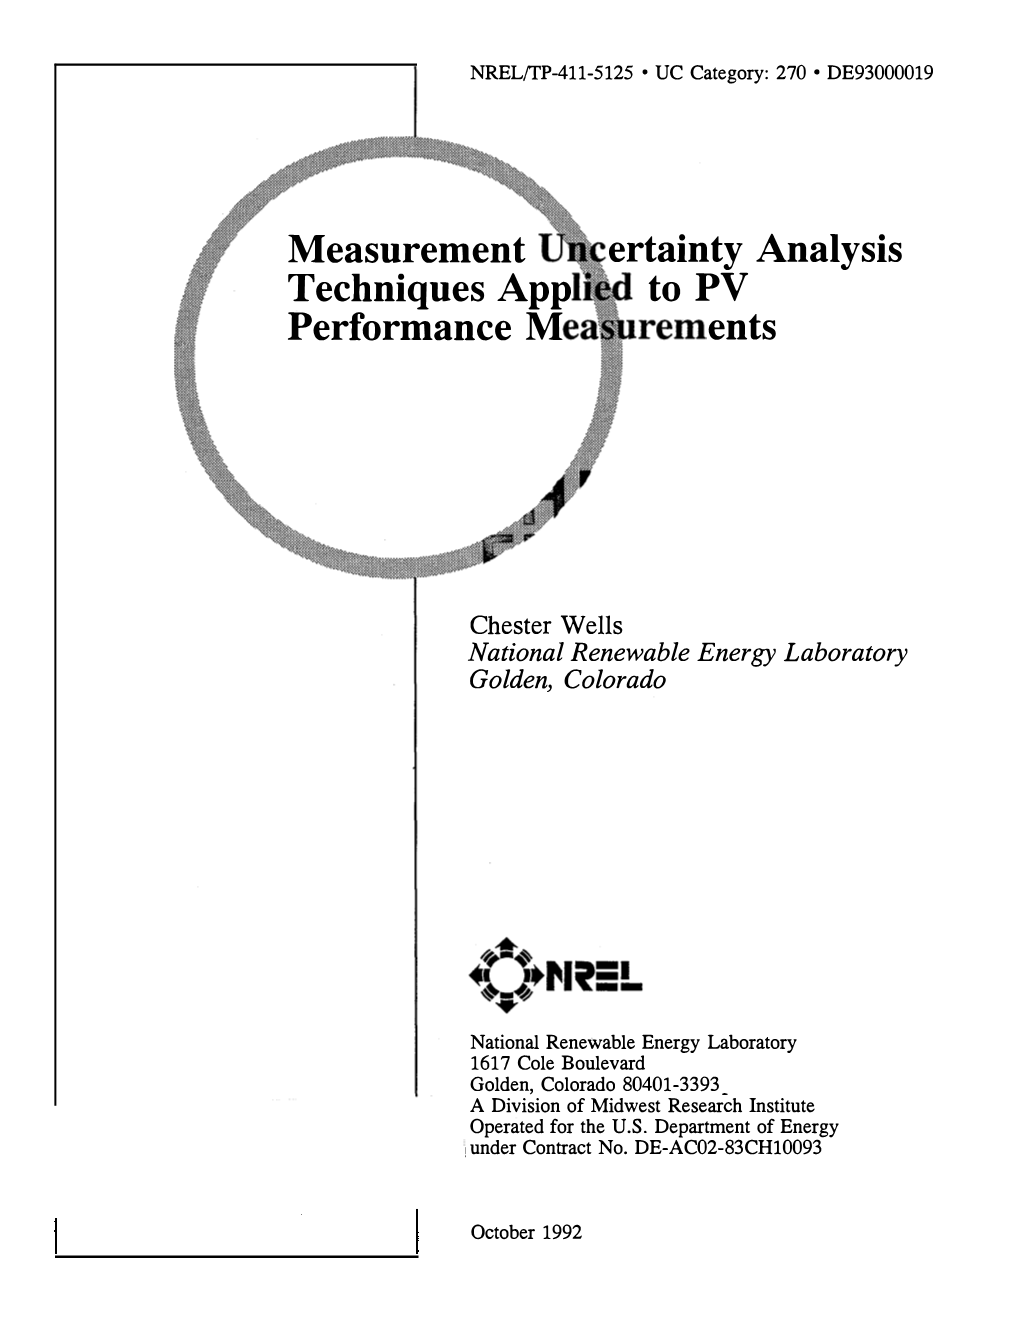 Measurement Uncertainty Analysis Techniques Applied to Pv Performance Measurements